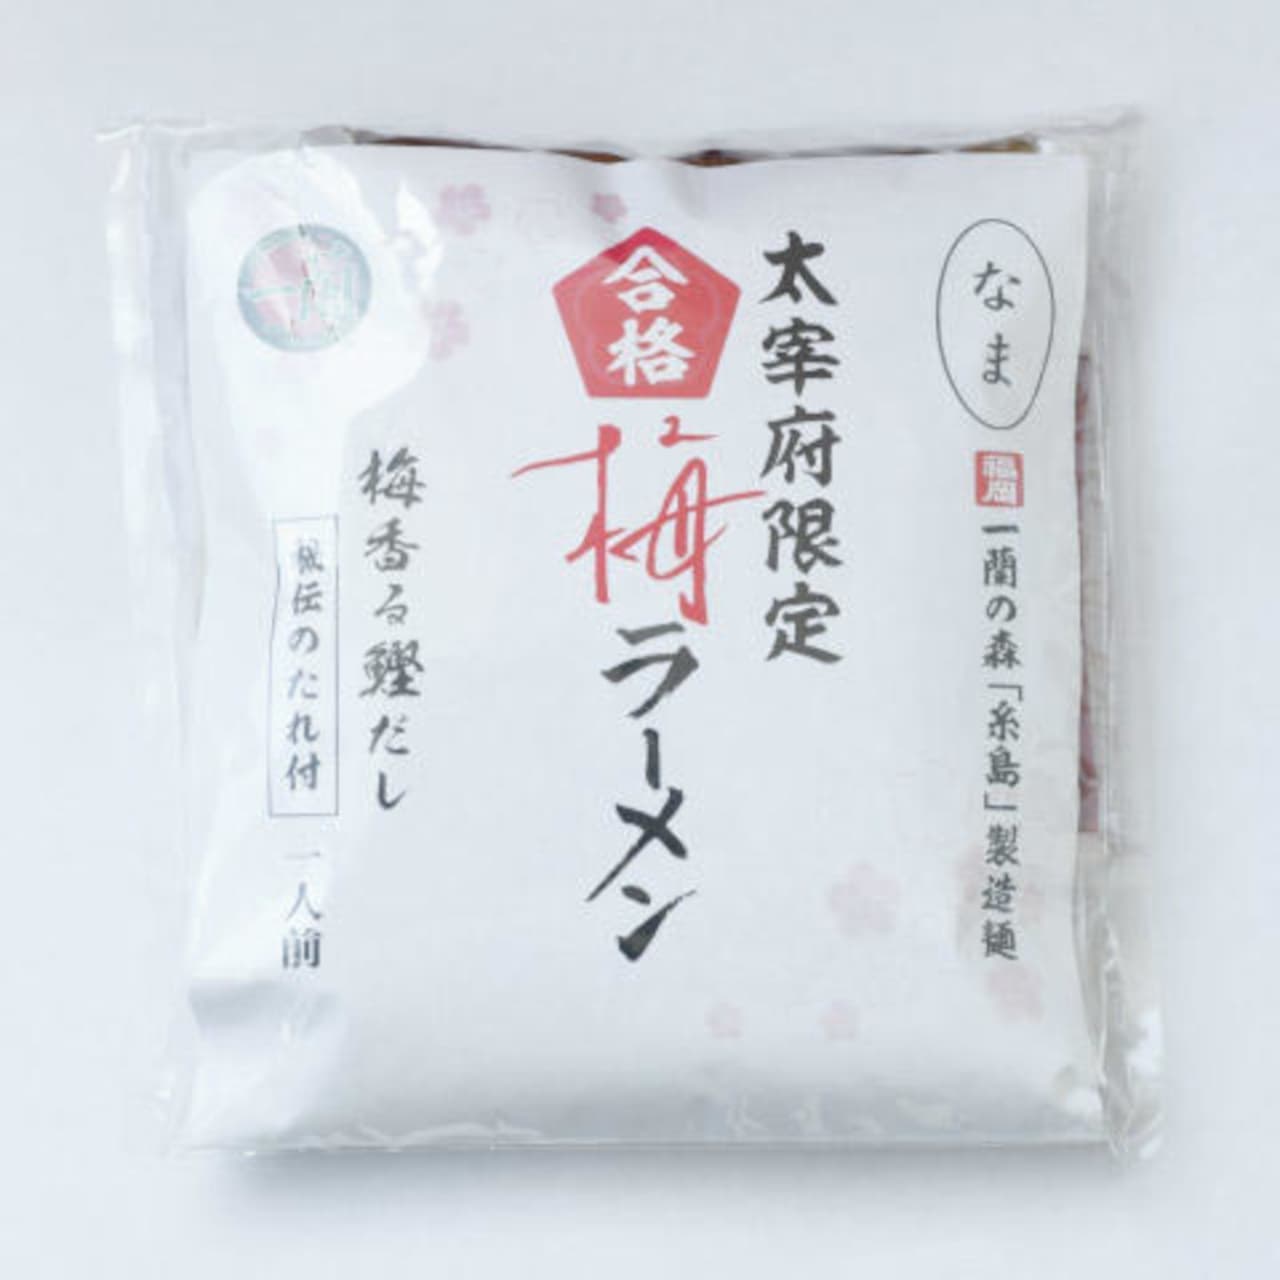 Ichiran "Dazaifu limited edition Passing Ume Ramen".